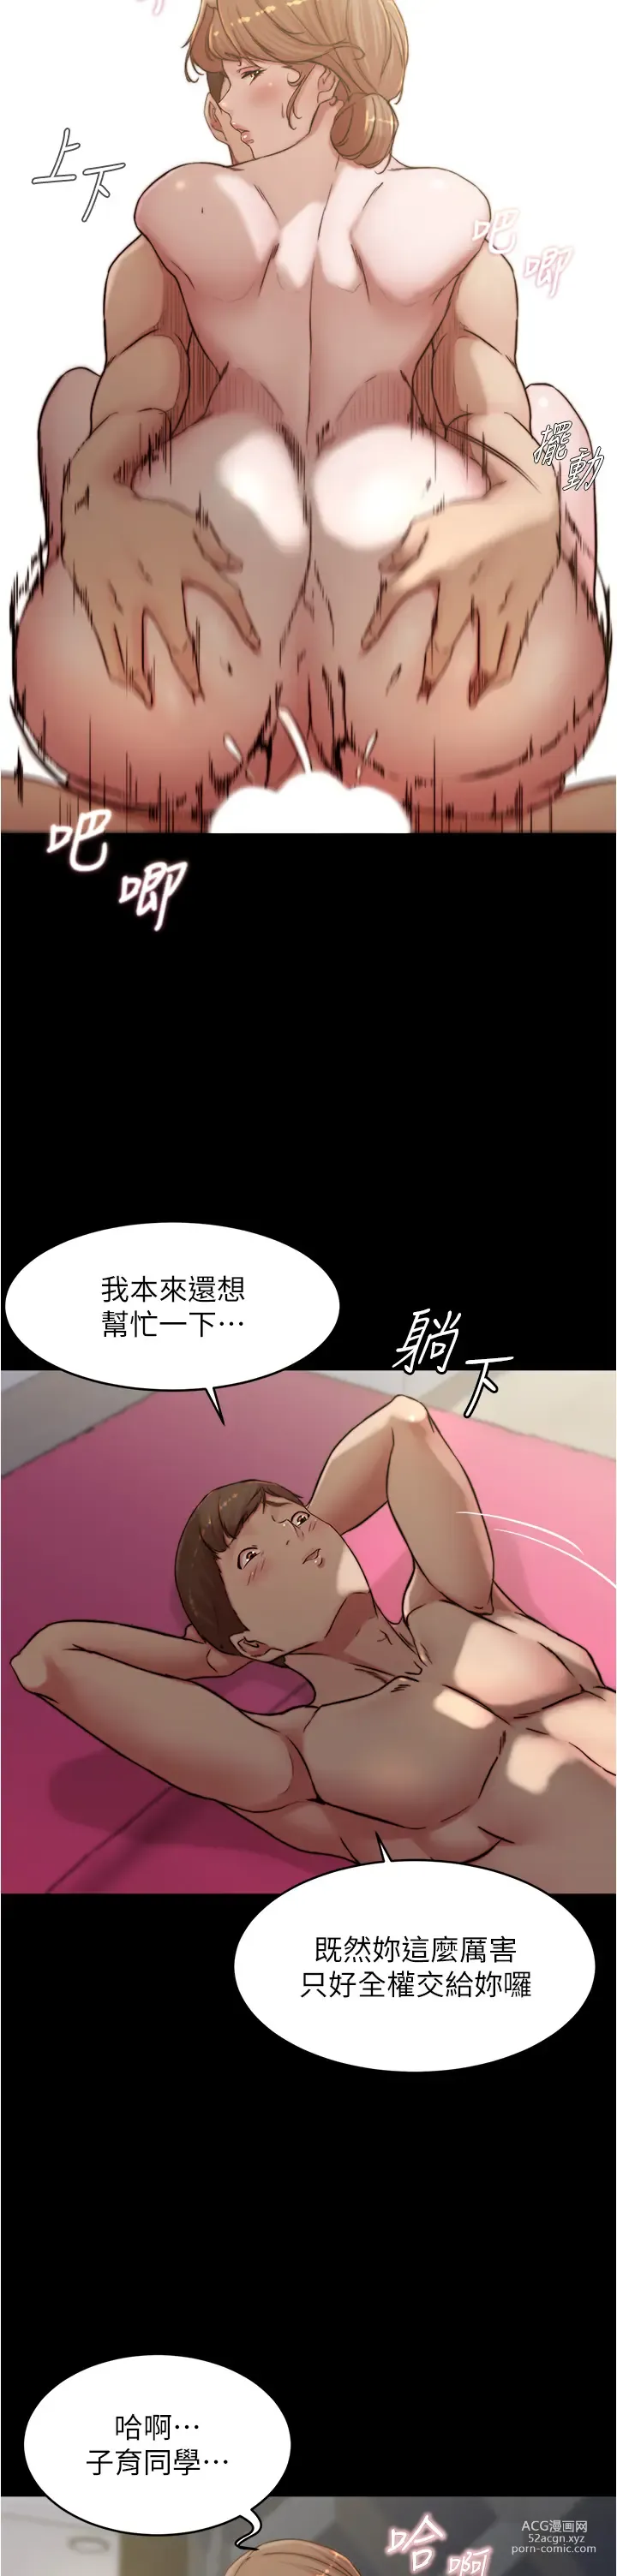 Page 1512 of manga 小裤裤笔记 小褲褲筆記 panty note 36-80